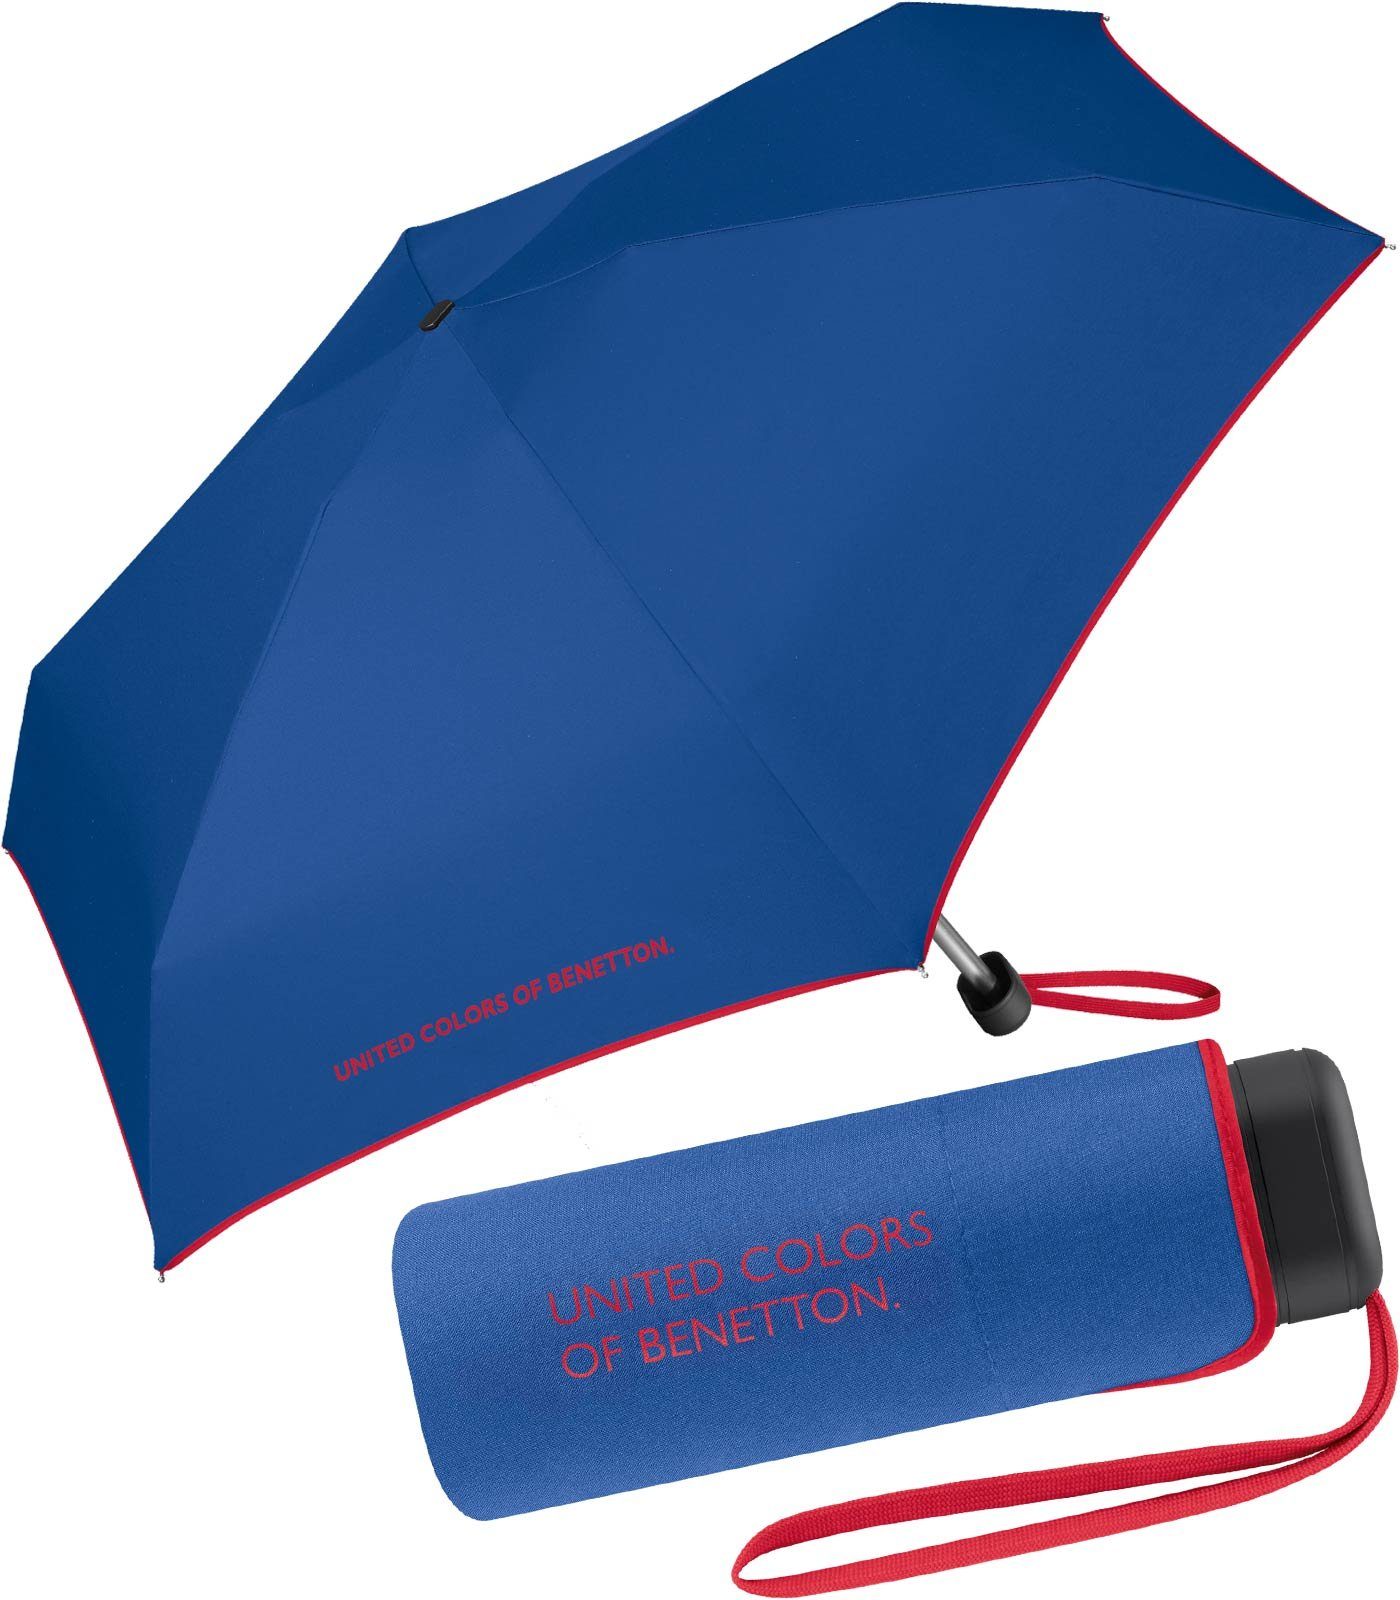 United Colors of Benetton winziger blau-rot Handöffner, mit mit Kontrastfarben am Schirmrand - Damen-Regenschirm Taschenregenschirm